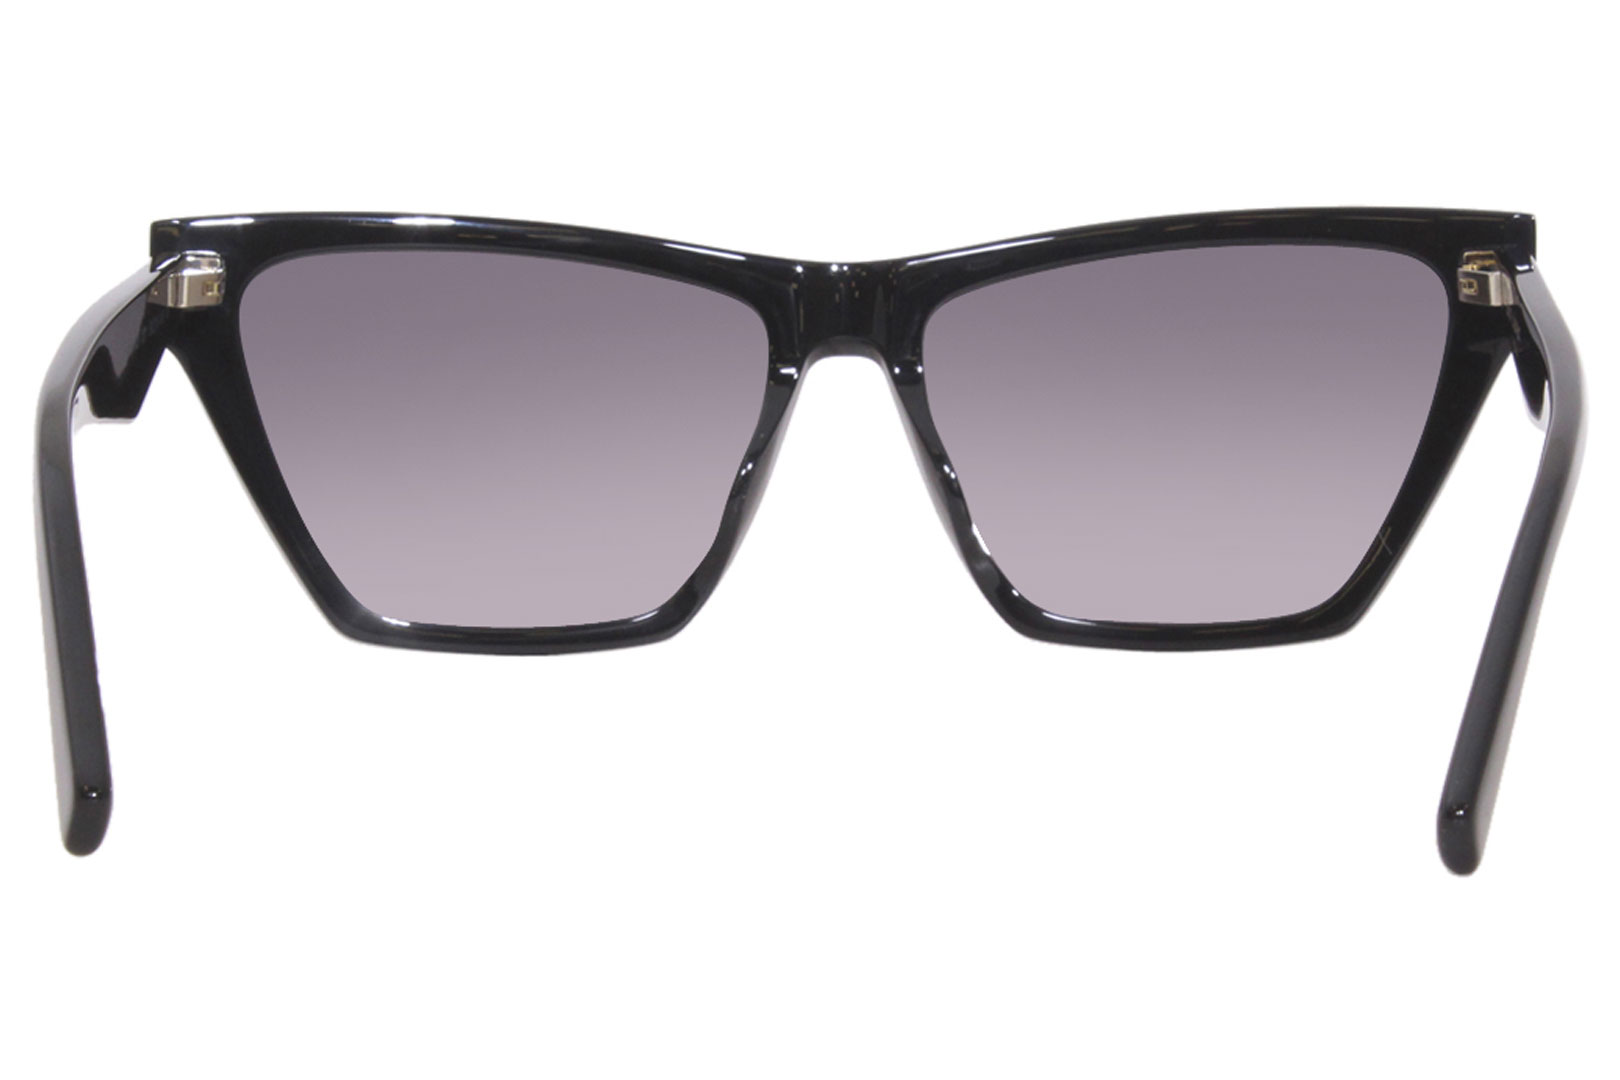 SAINT LAURENT Sunglasses SL536 001 Black Gold 2023